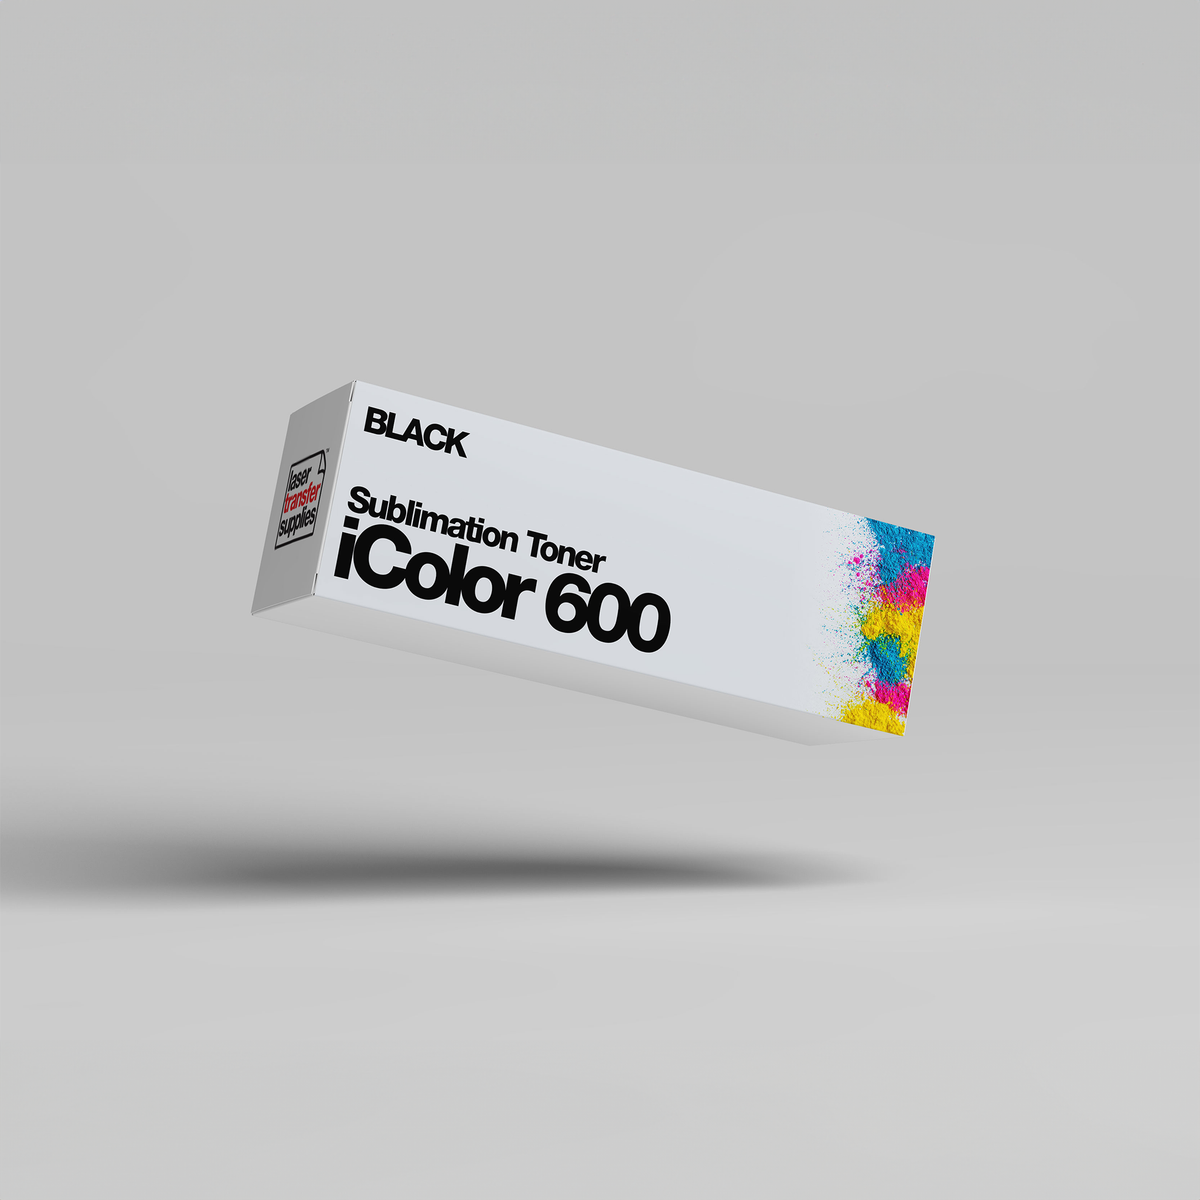 IColor 600 Sublimation Toner